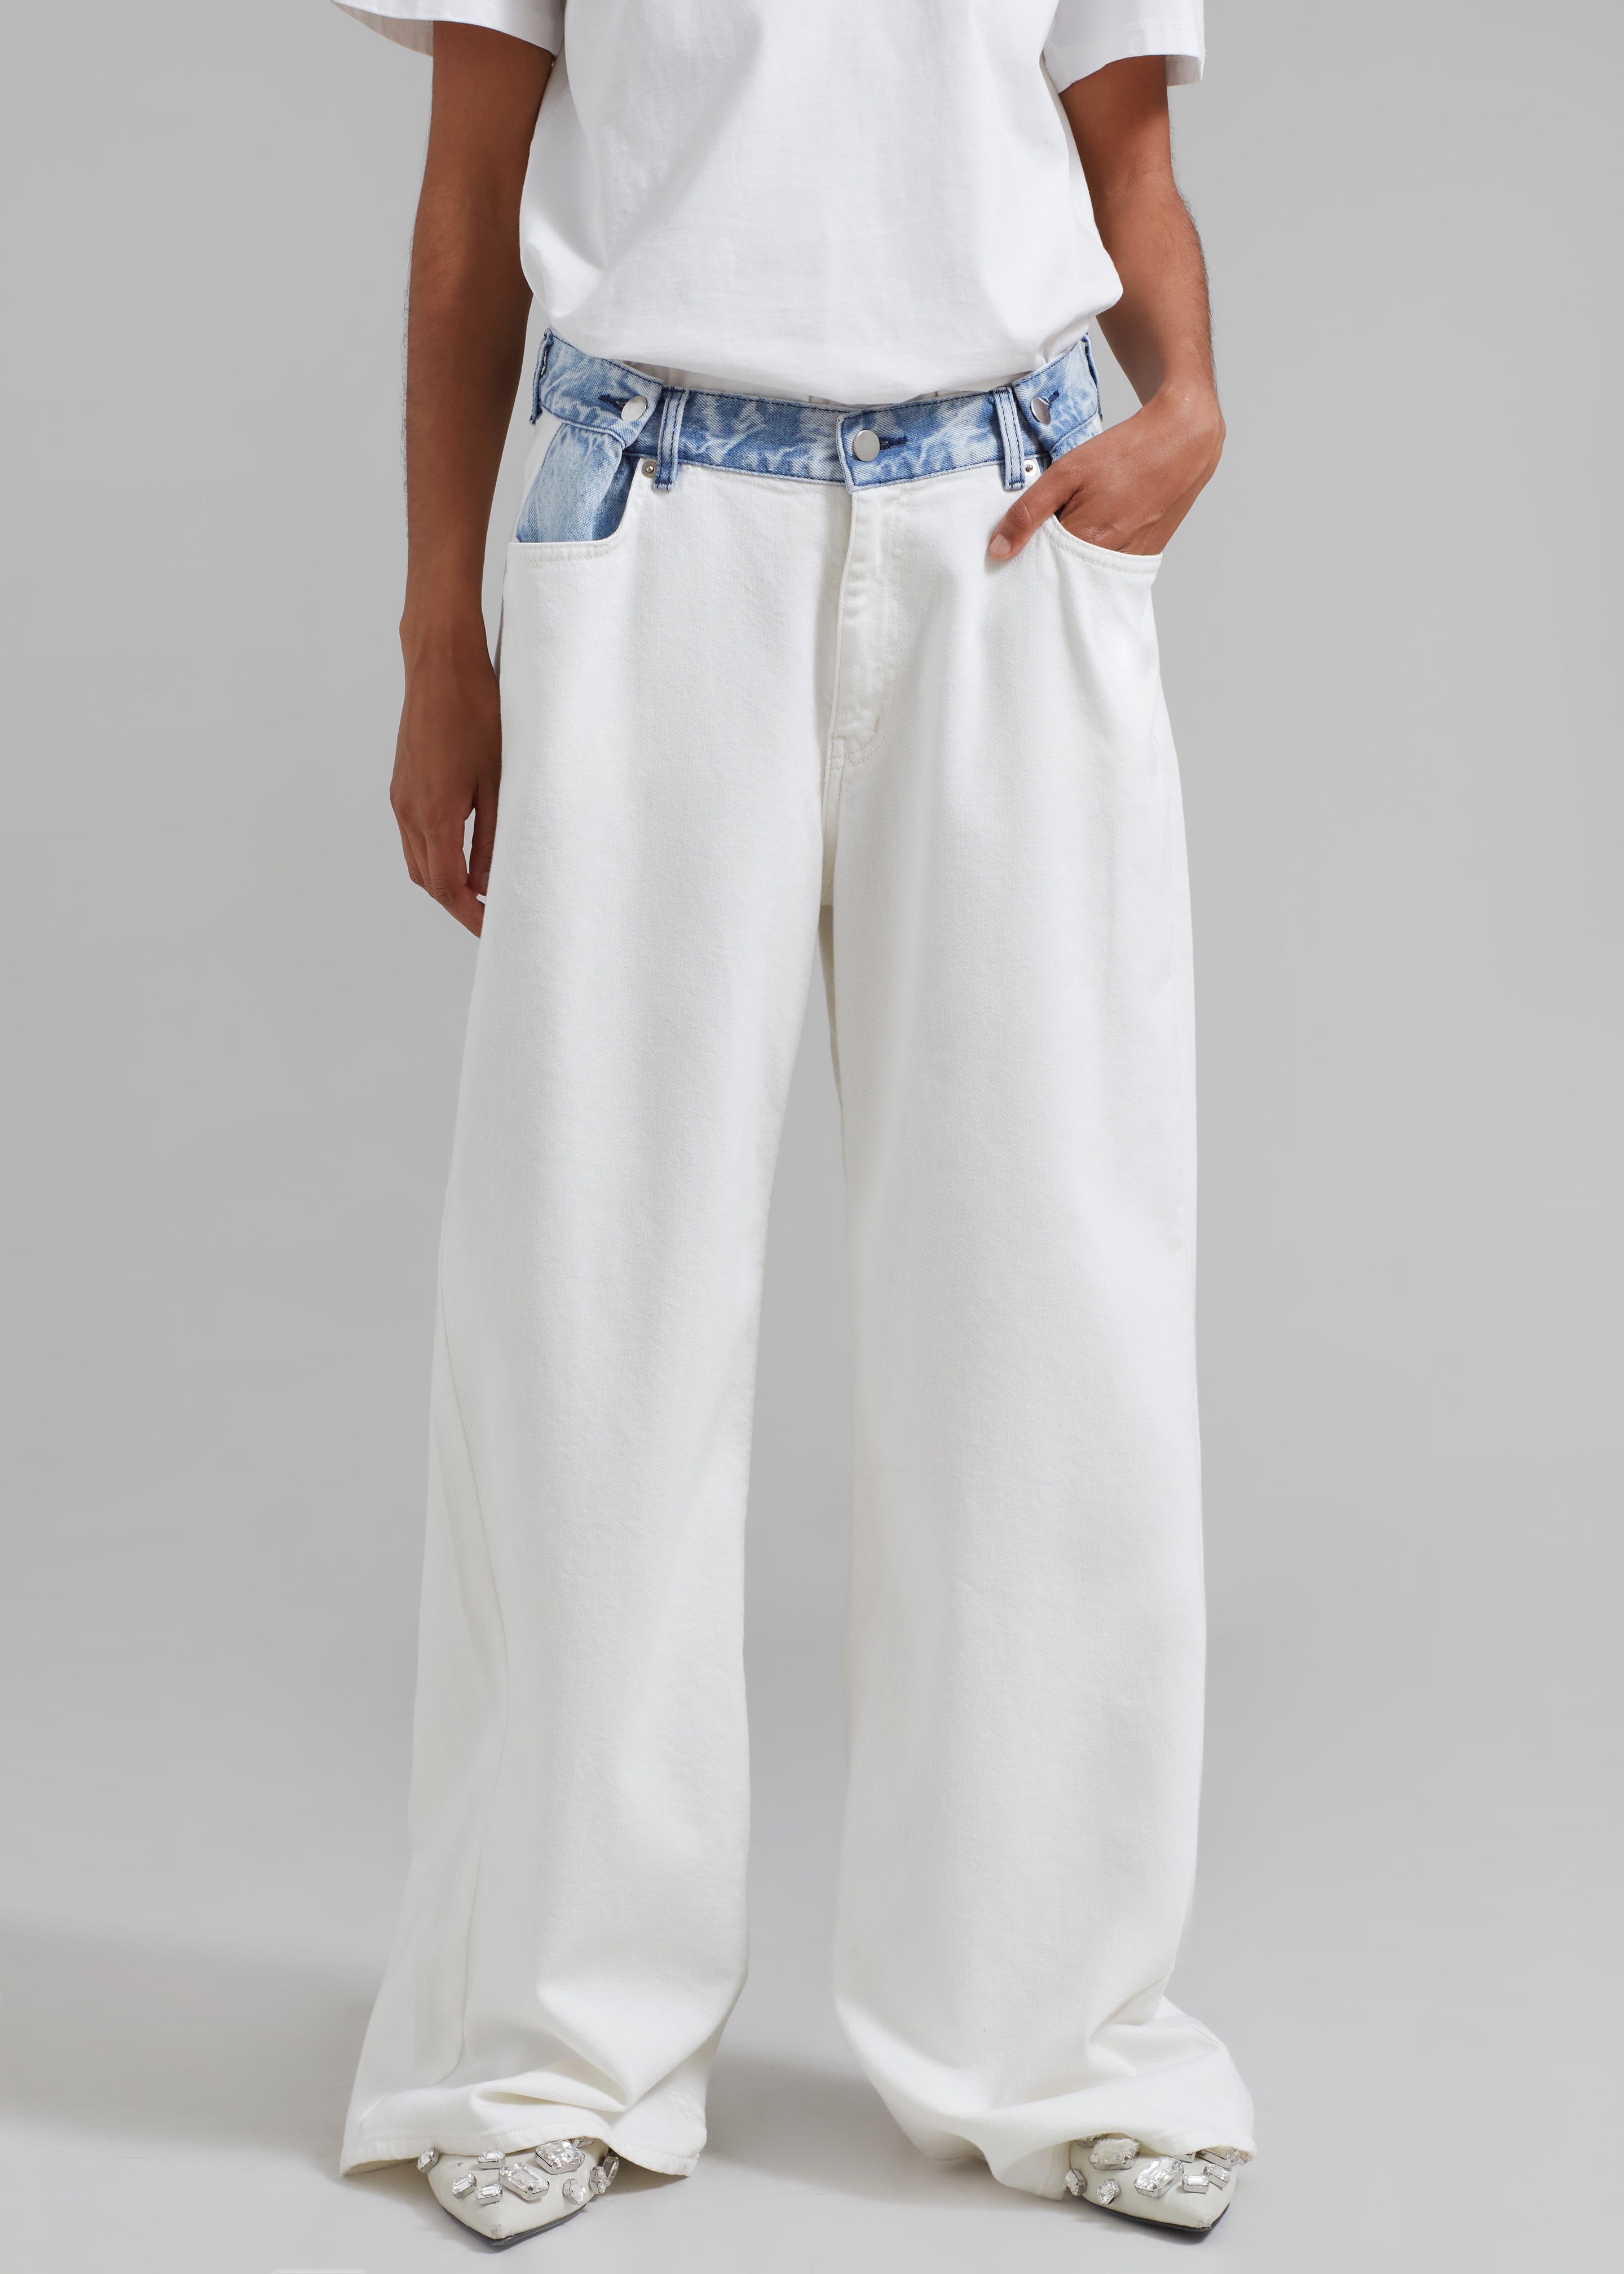 Hayla Contrast Denim Pants - Off White/Blue - 5